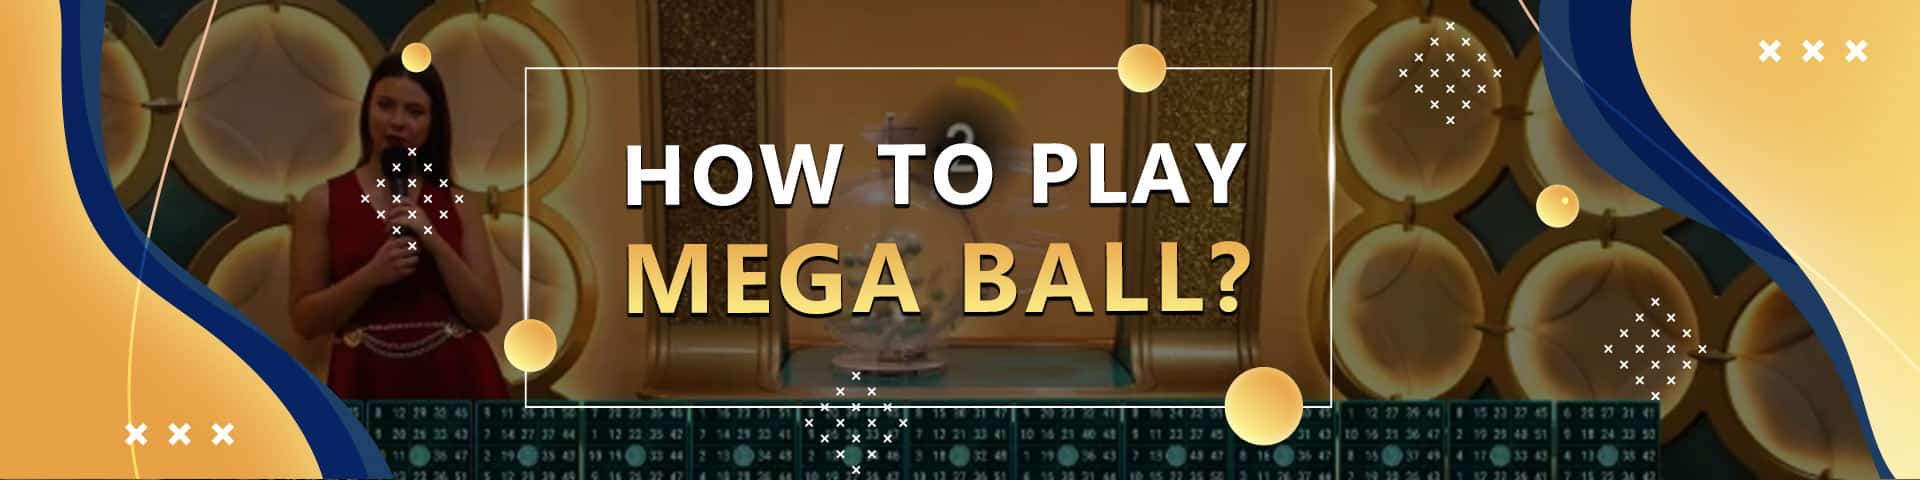 How to play mega ball?